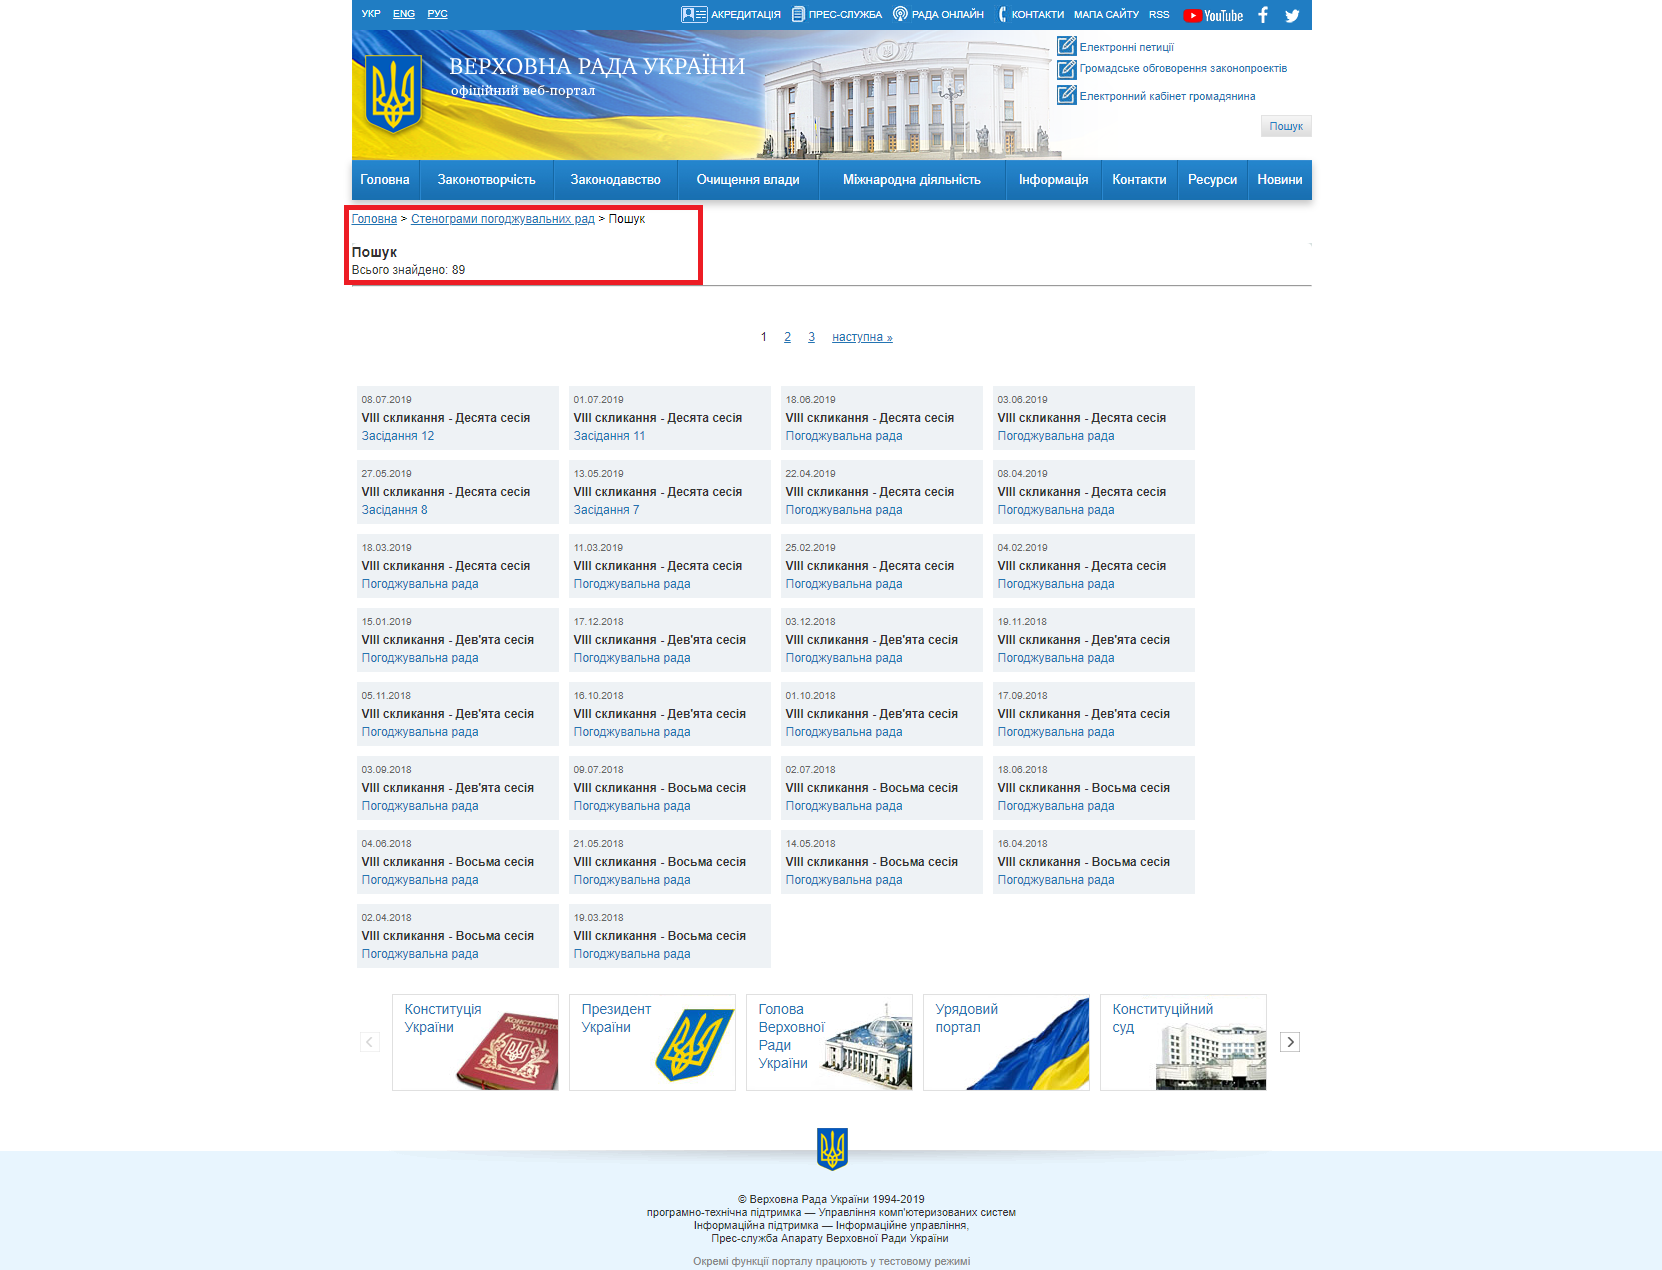 https://iportal.rada.gov.ua/meeting/search?search_convocation=8&search_session=0&search_string=&search_type=4&submit=%D0%97%D0%BD%D0%B0%D0%B9%D1%82%D0%B8